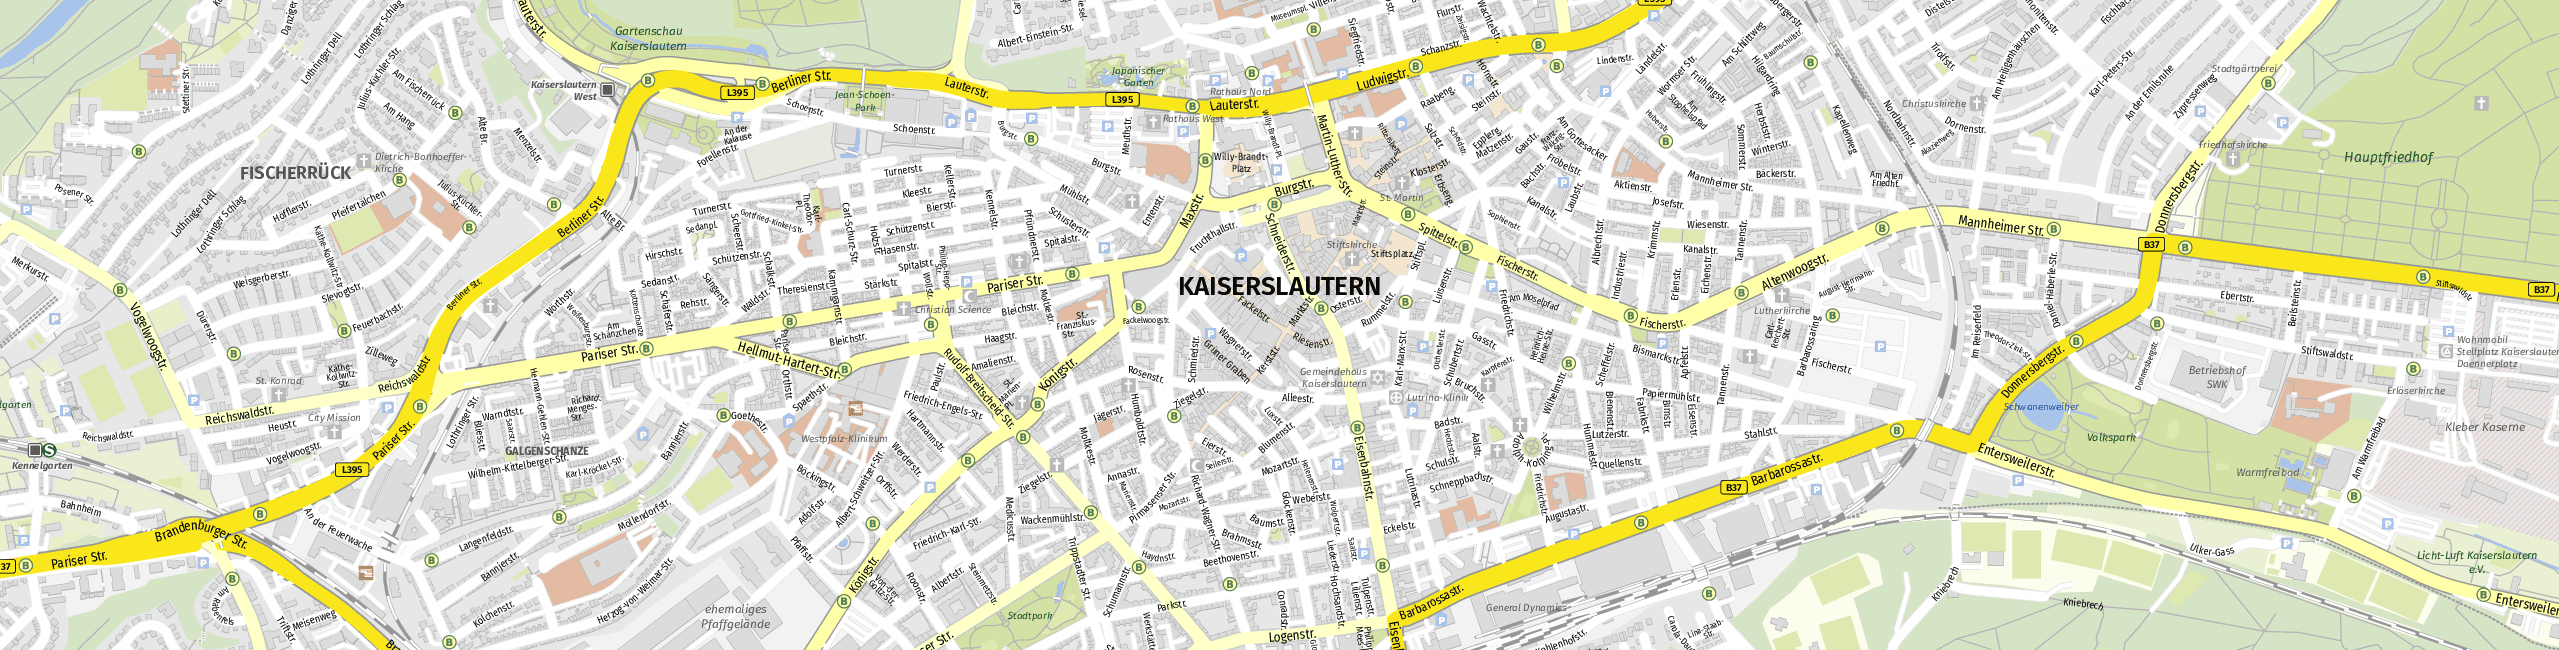 Stadtplan Kaiserslautern zum Downloaden.